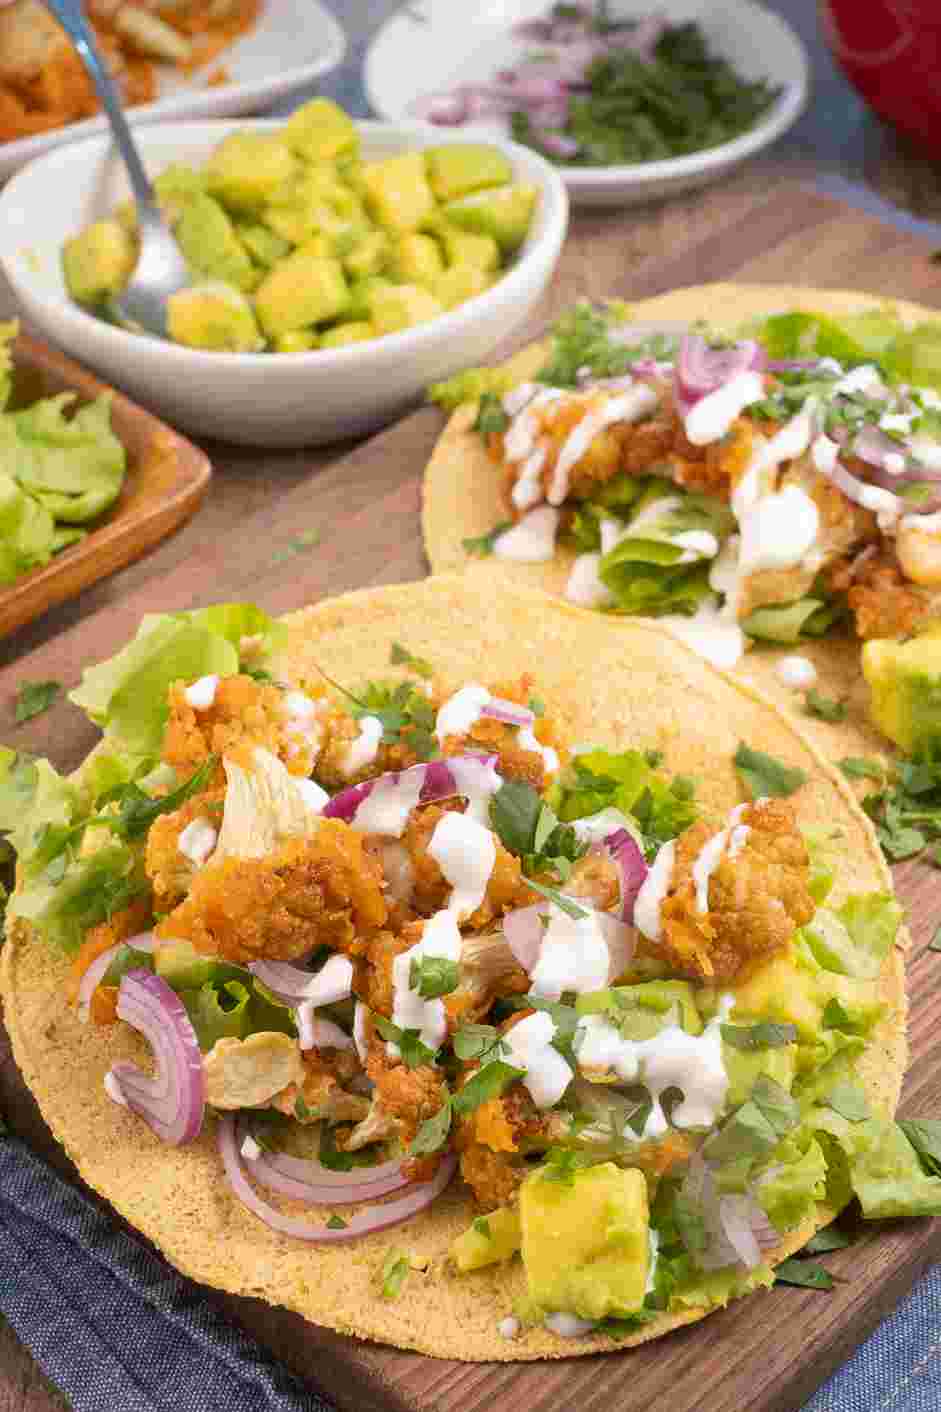 Buffalo Cauliflower Tacos Recipe: Serve the tacos immediately and enjoy!